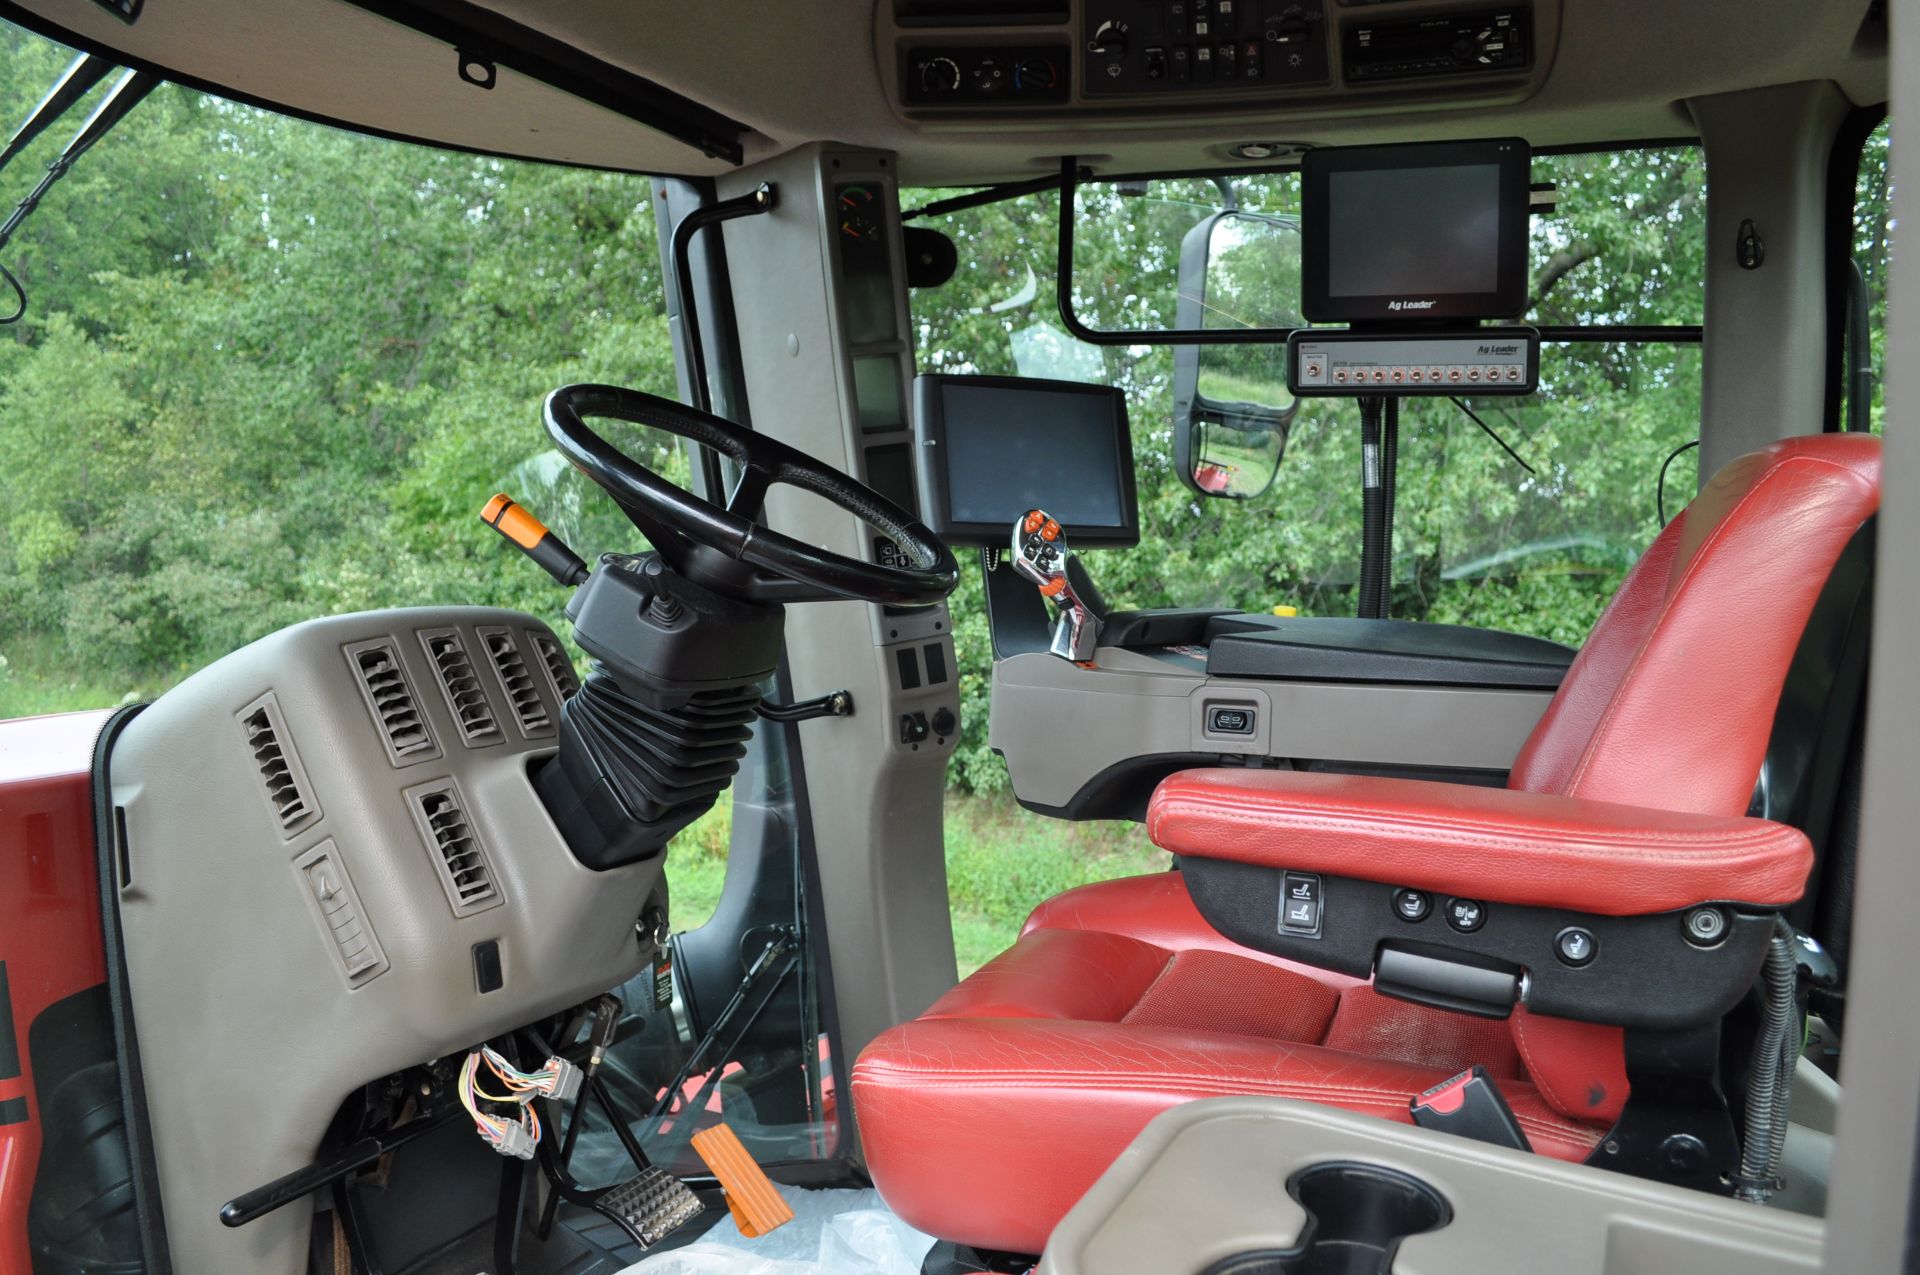 2015 Case IH 540 QuadTrac tractor, powershift, 30” belts, 6 hyd remotes, 1000 PTO, ag drawbar - Image 22 of 35